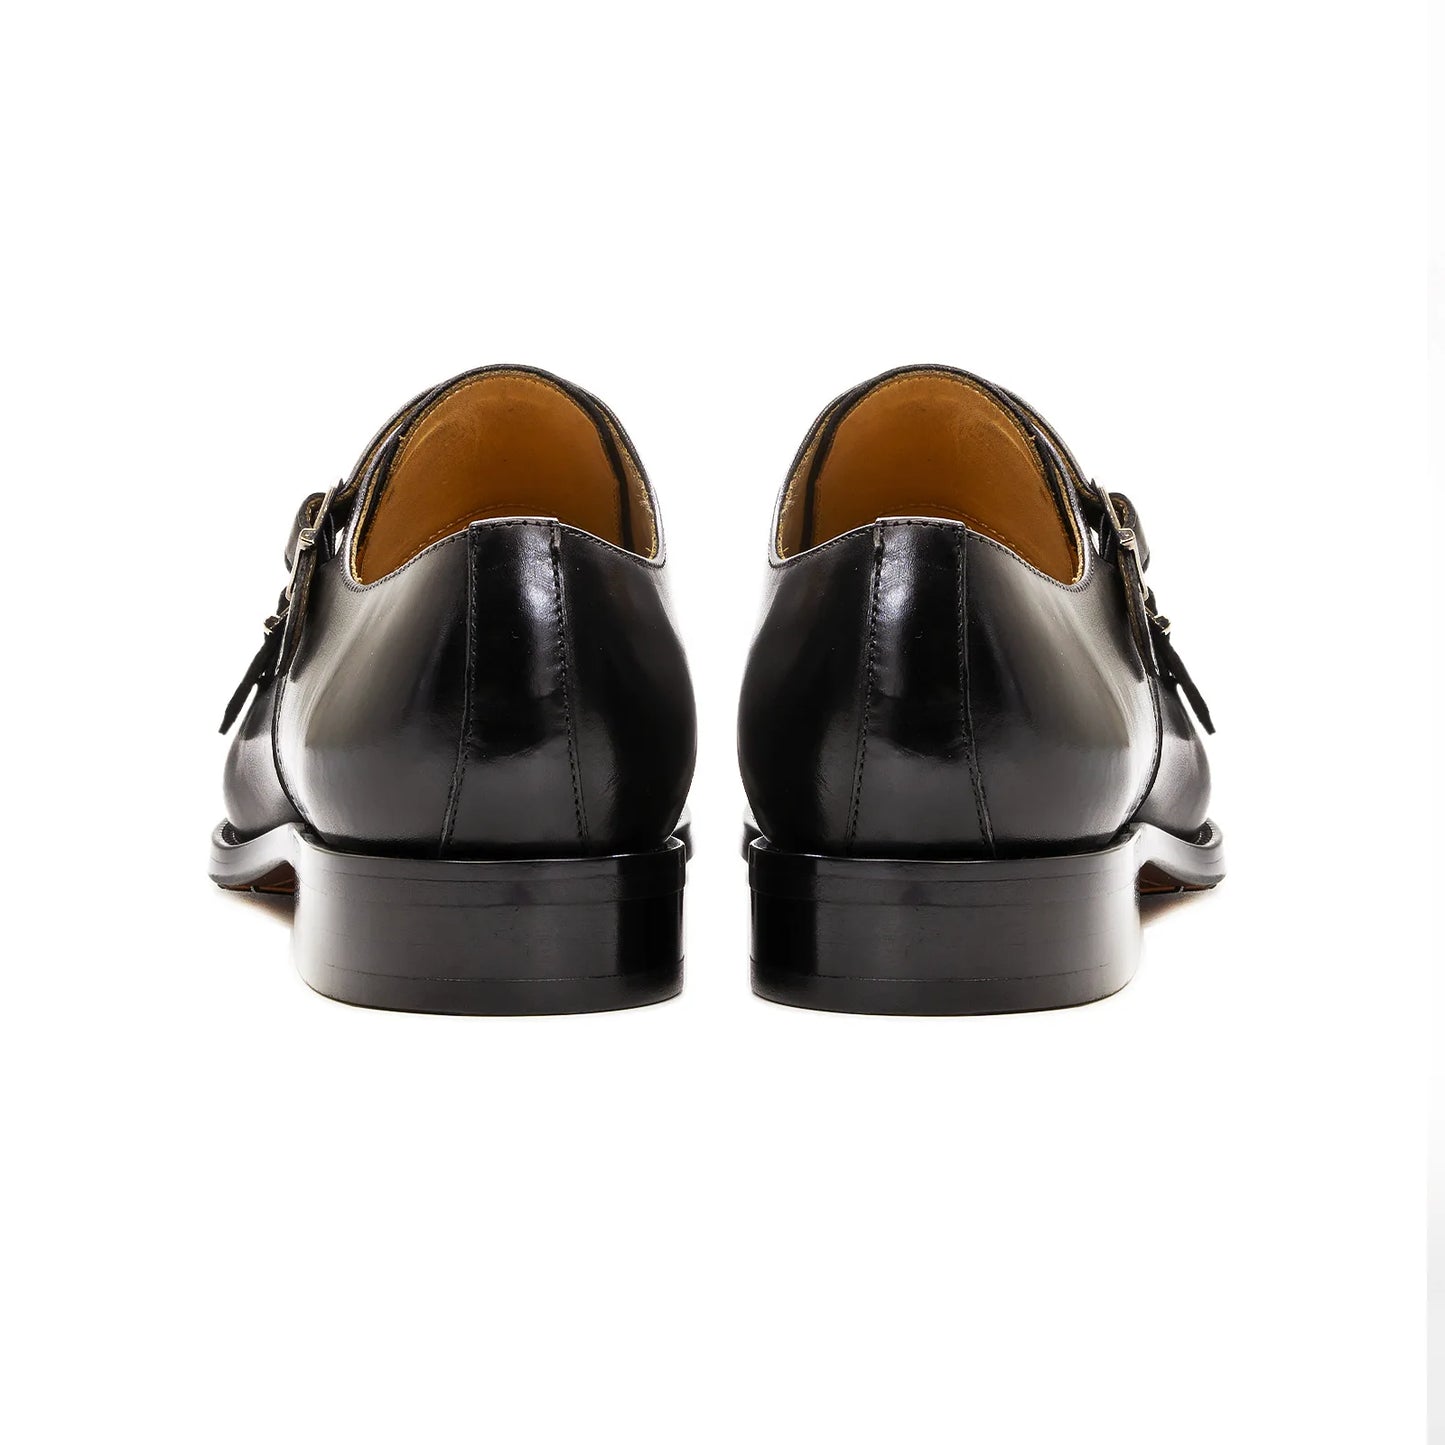 Luxury Genuine Leather Men's Dress Shoes Double Buckle Monk Strap Cap Toe Business Office Wedding Party Formal Shoes for Men